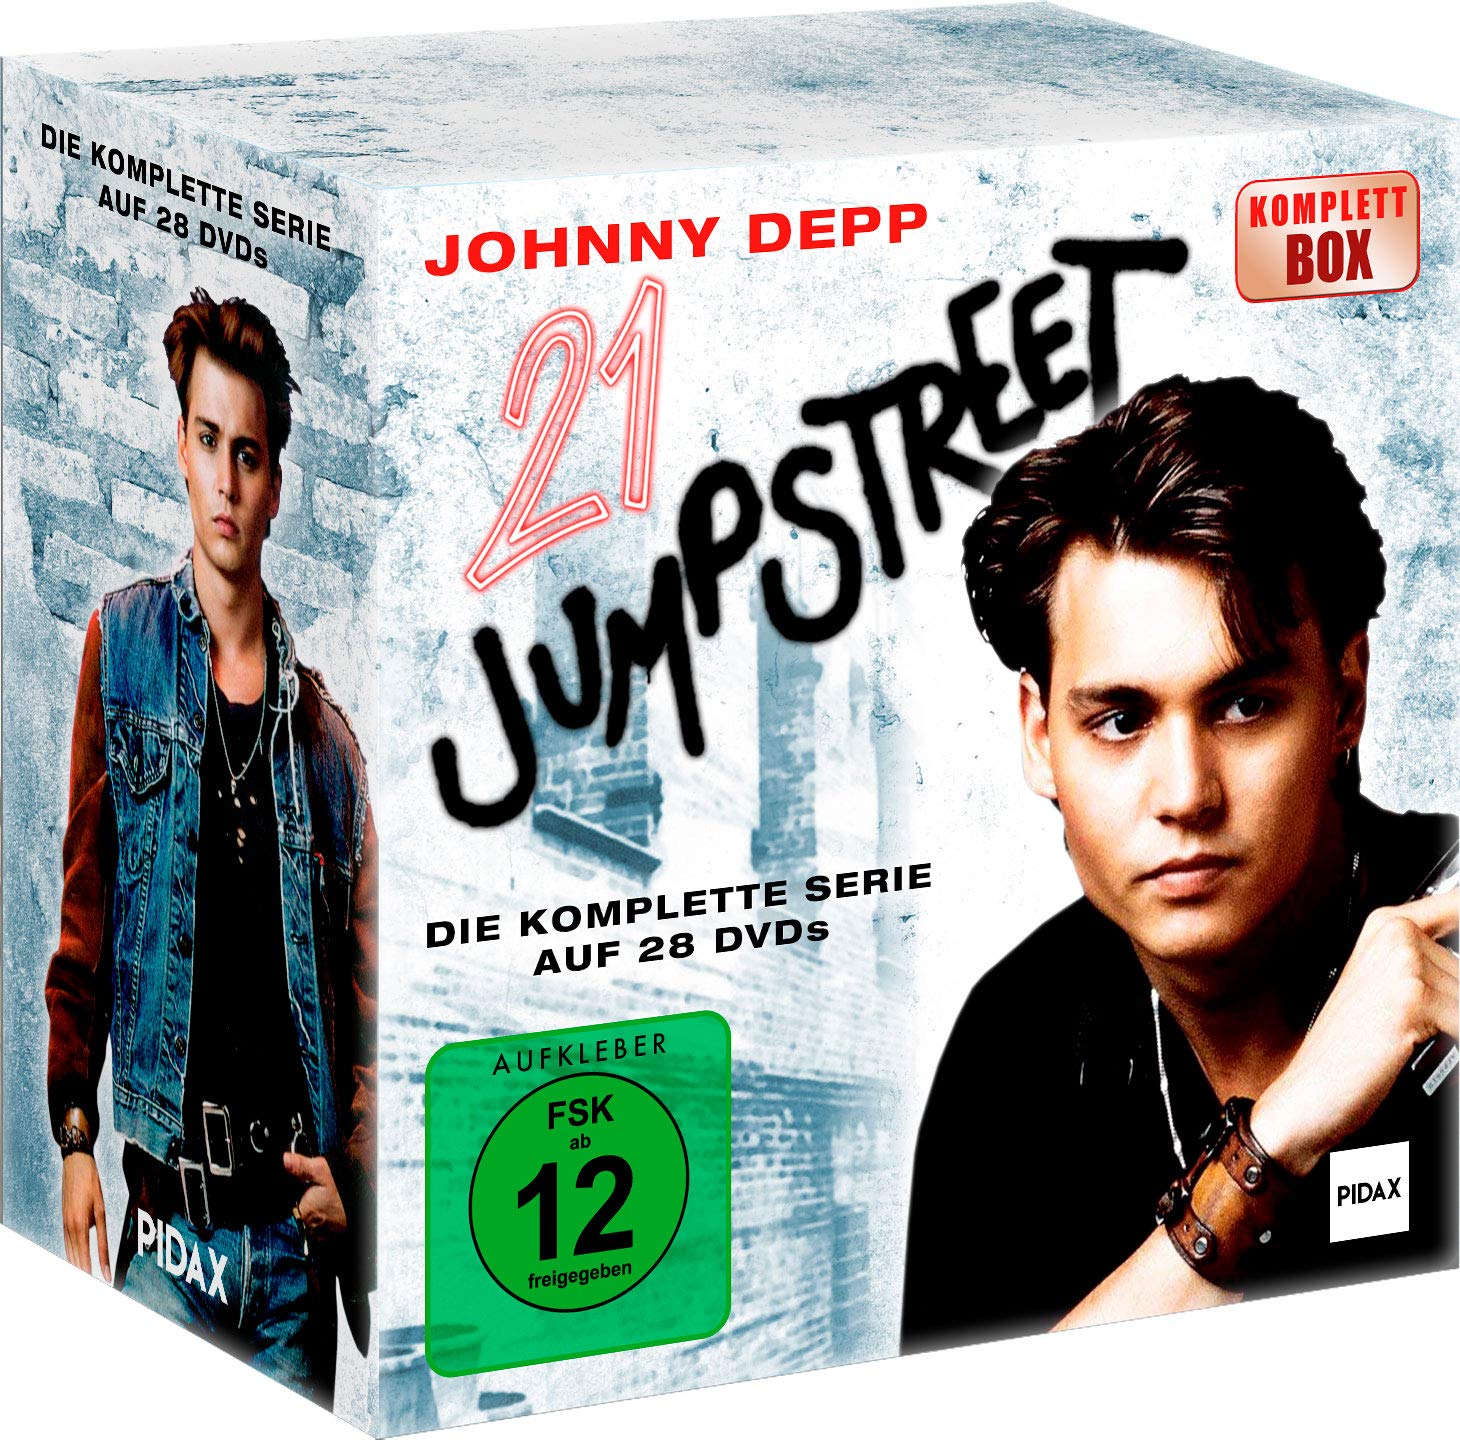 21 Jump Street - Komplettbox - Komplette Serie auf 28 Discs